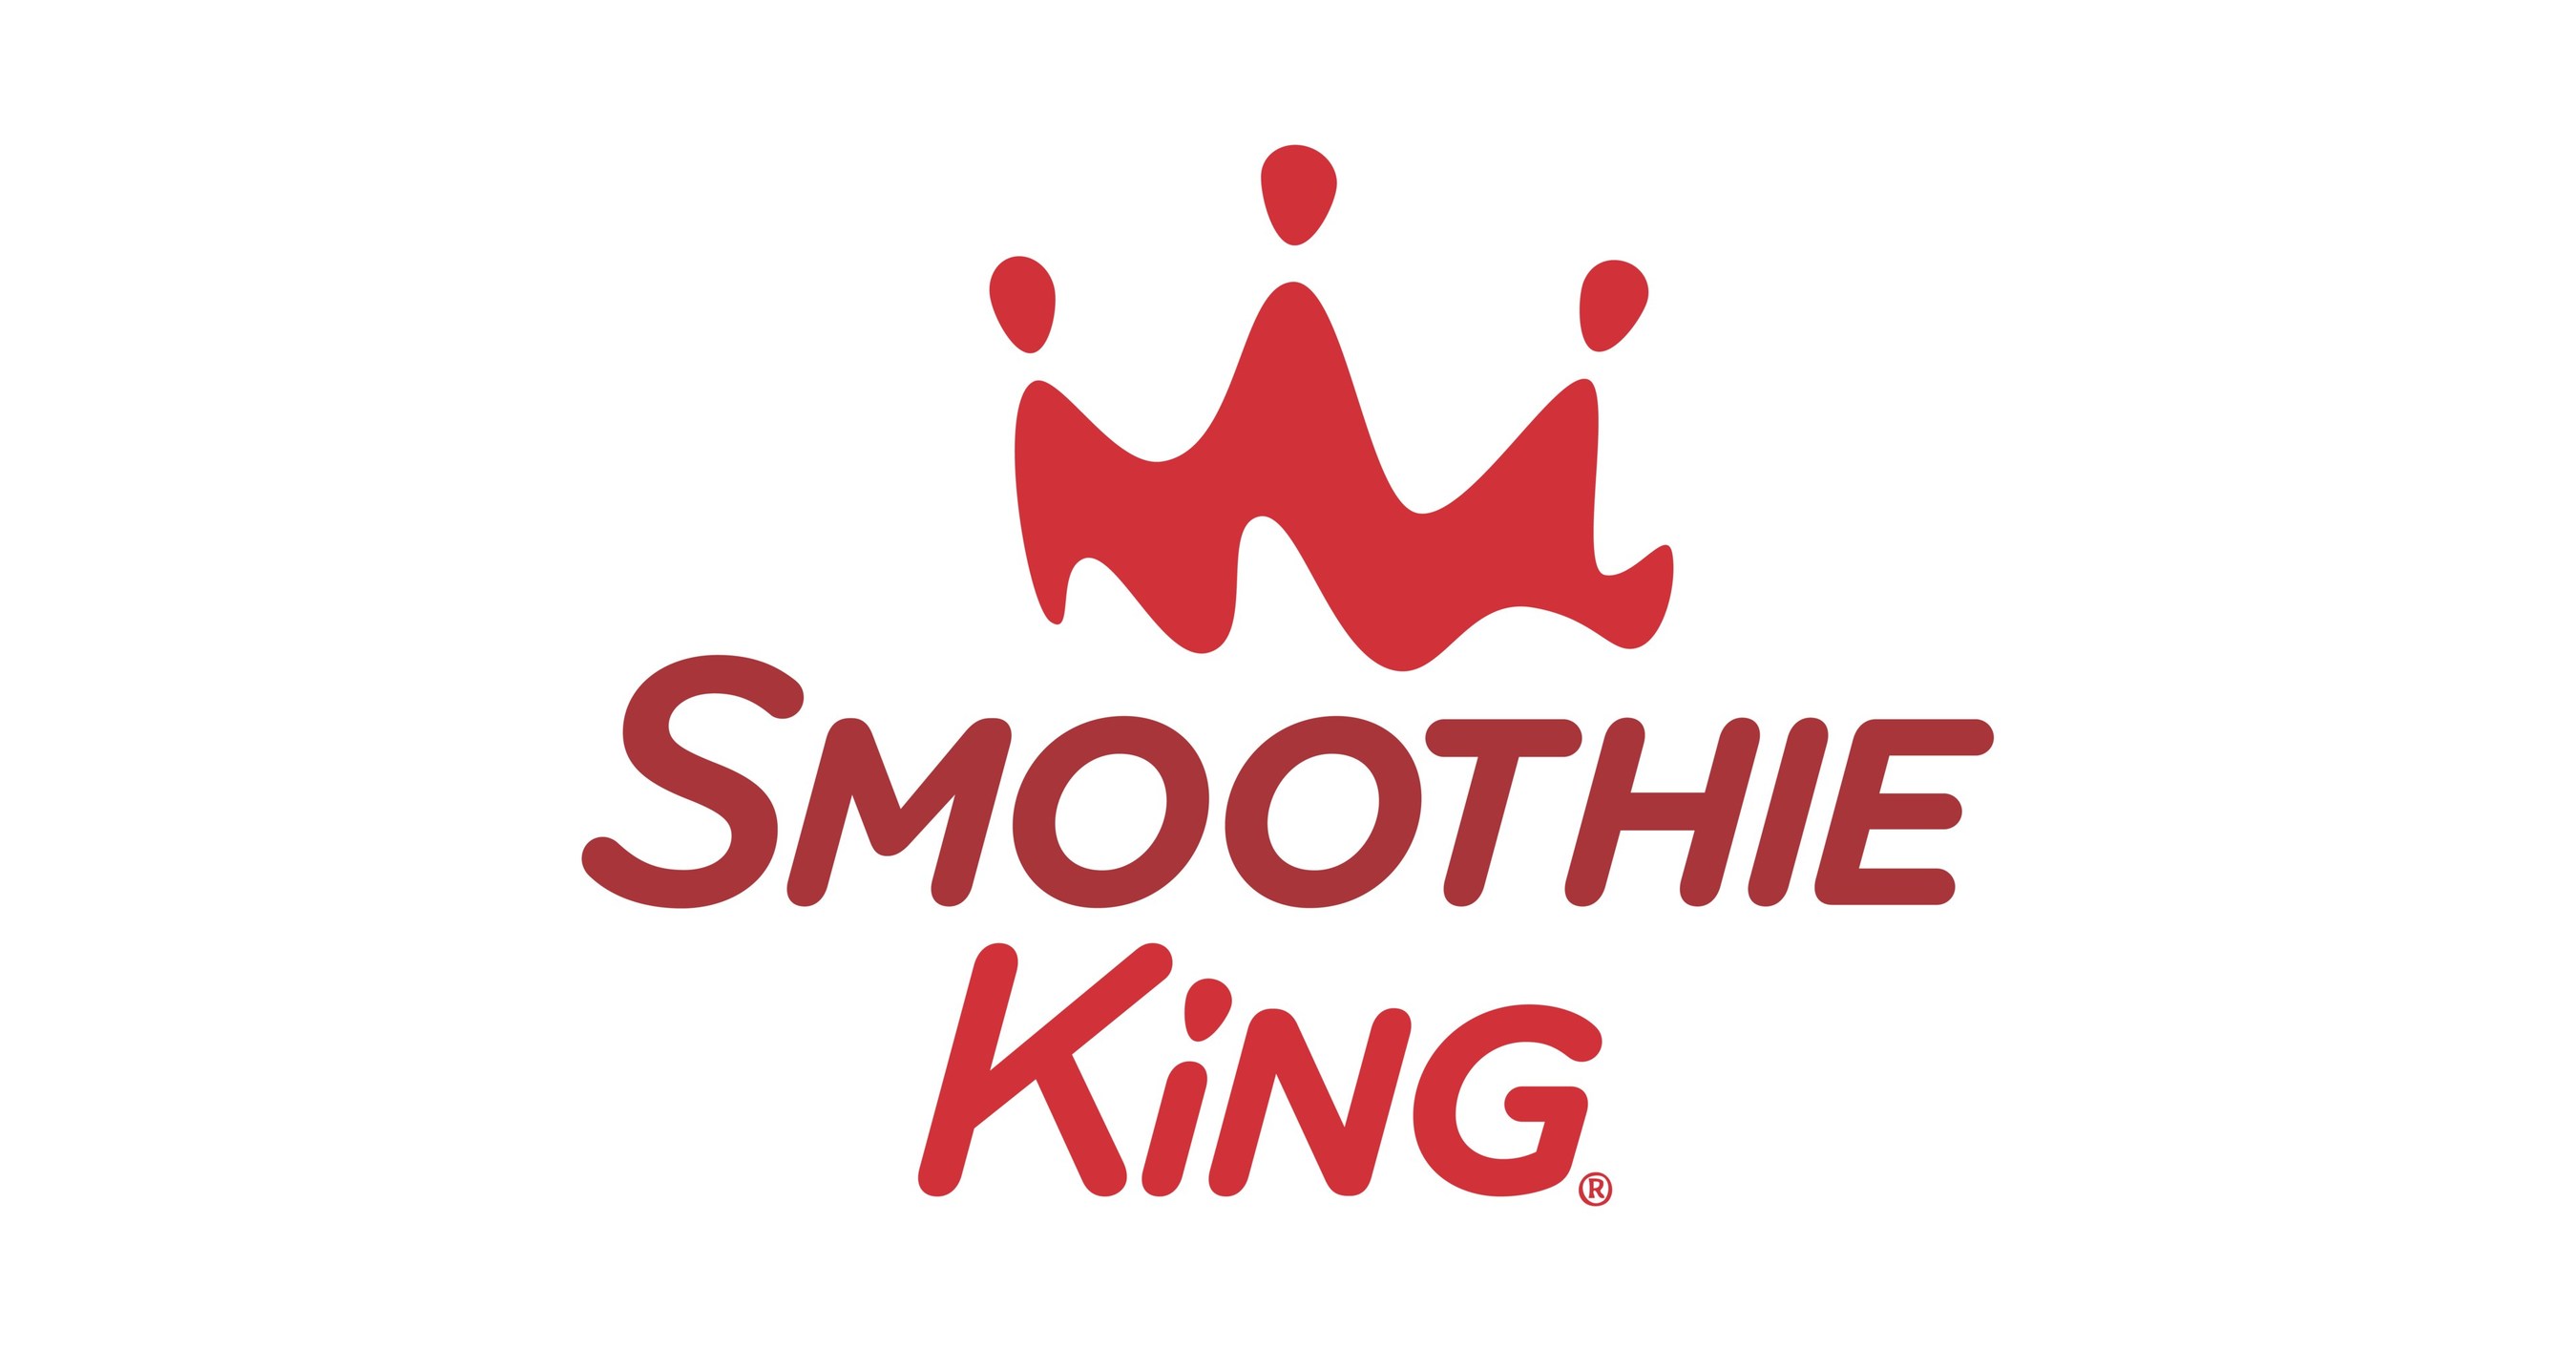 https://mma.prnewswire.com/media/1839992/Smoothie_King_Logo.jpg?p=facebook